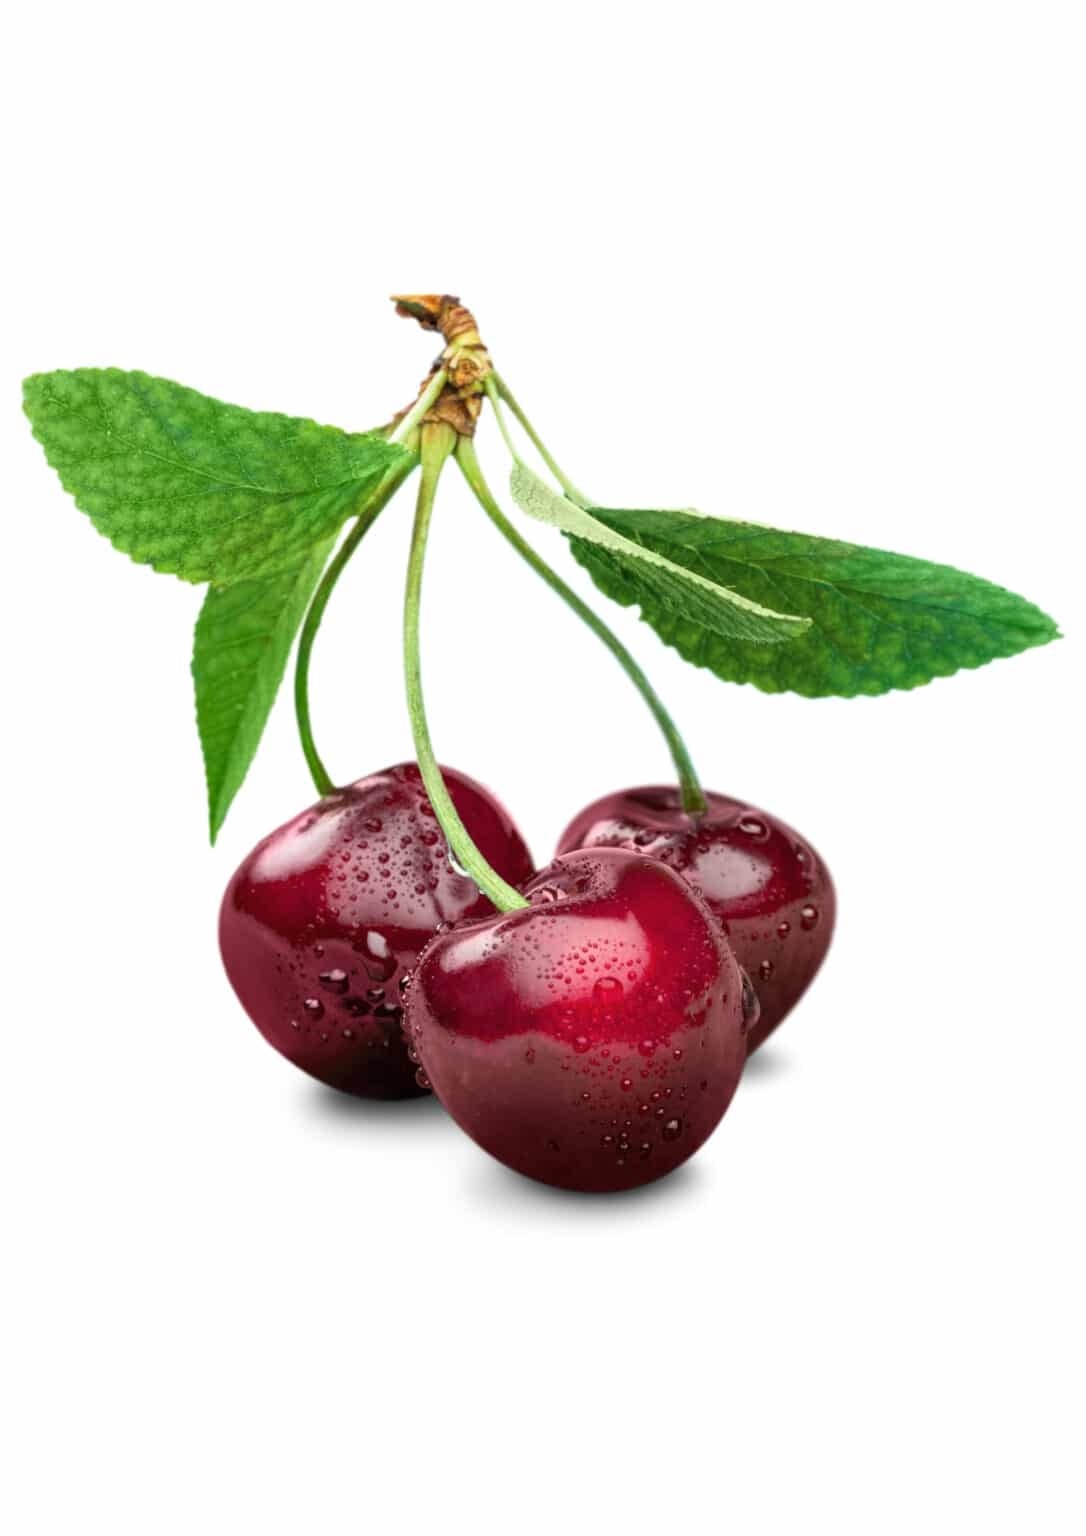 Cherries Jubilee recipe